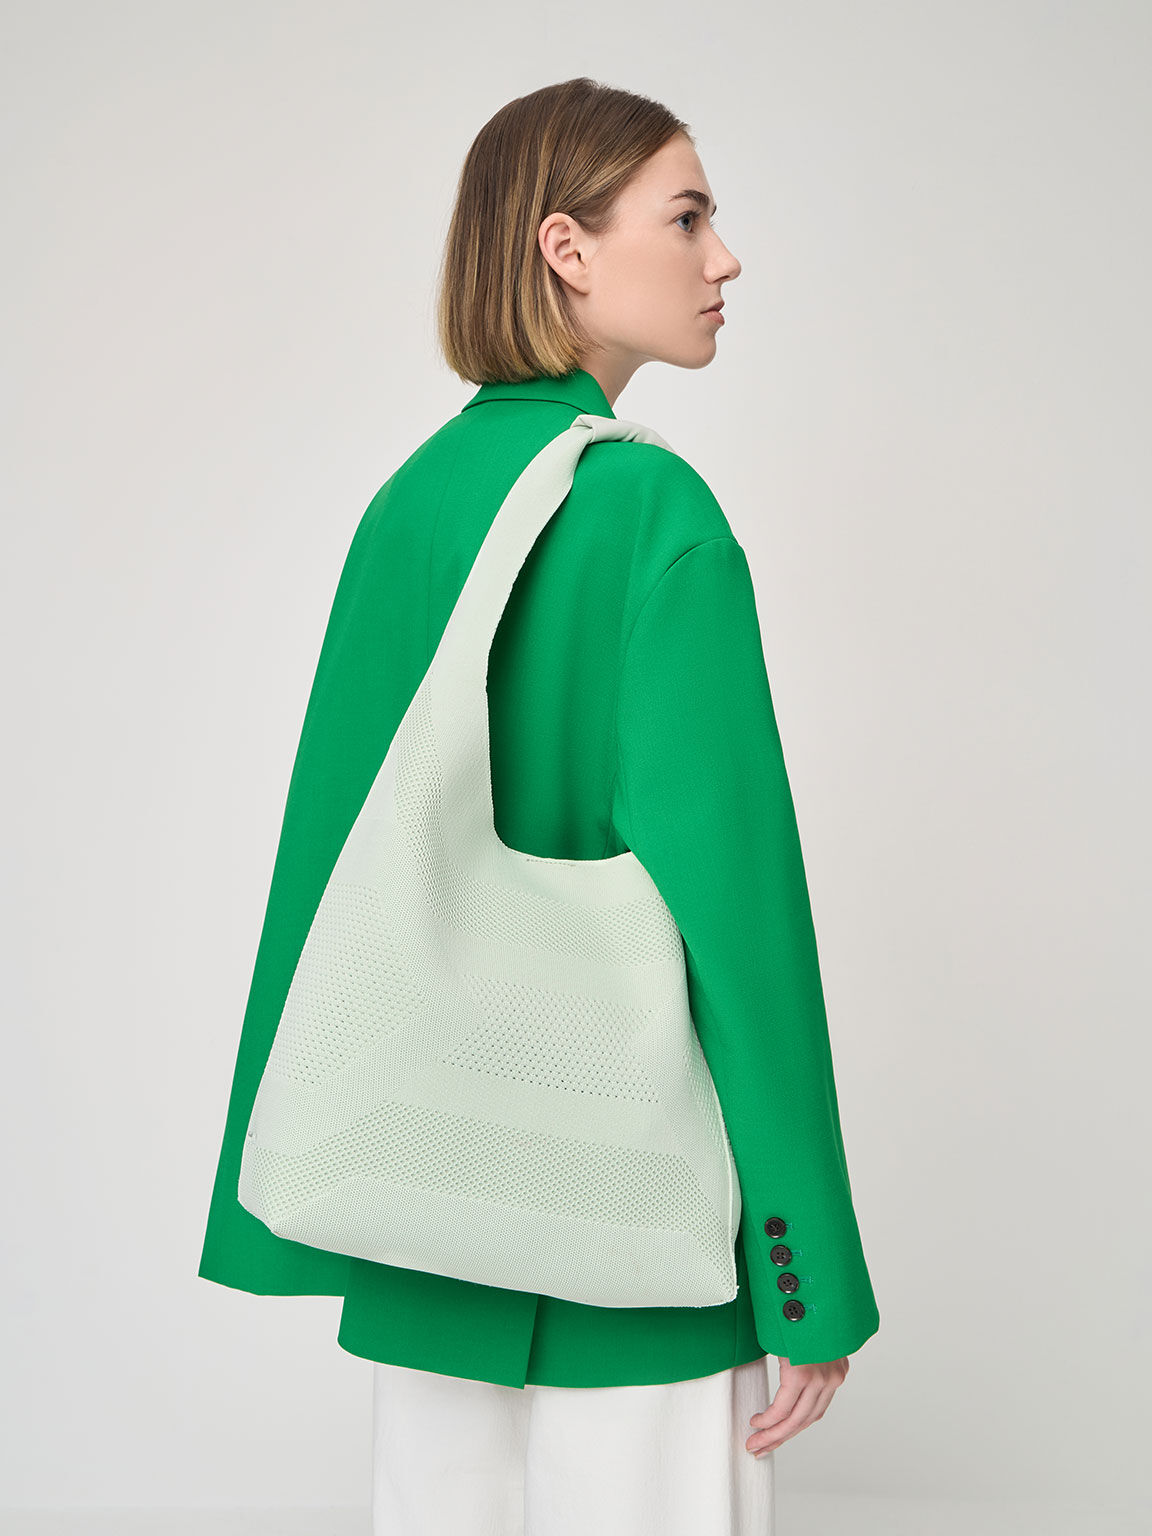 Lorain Knitted Hobo Bag, Mint Green, hi-res